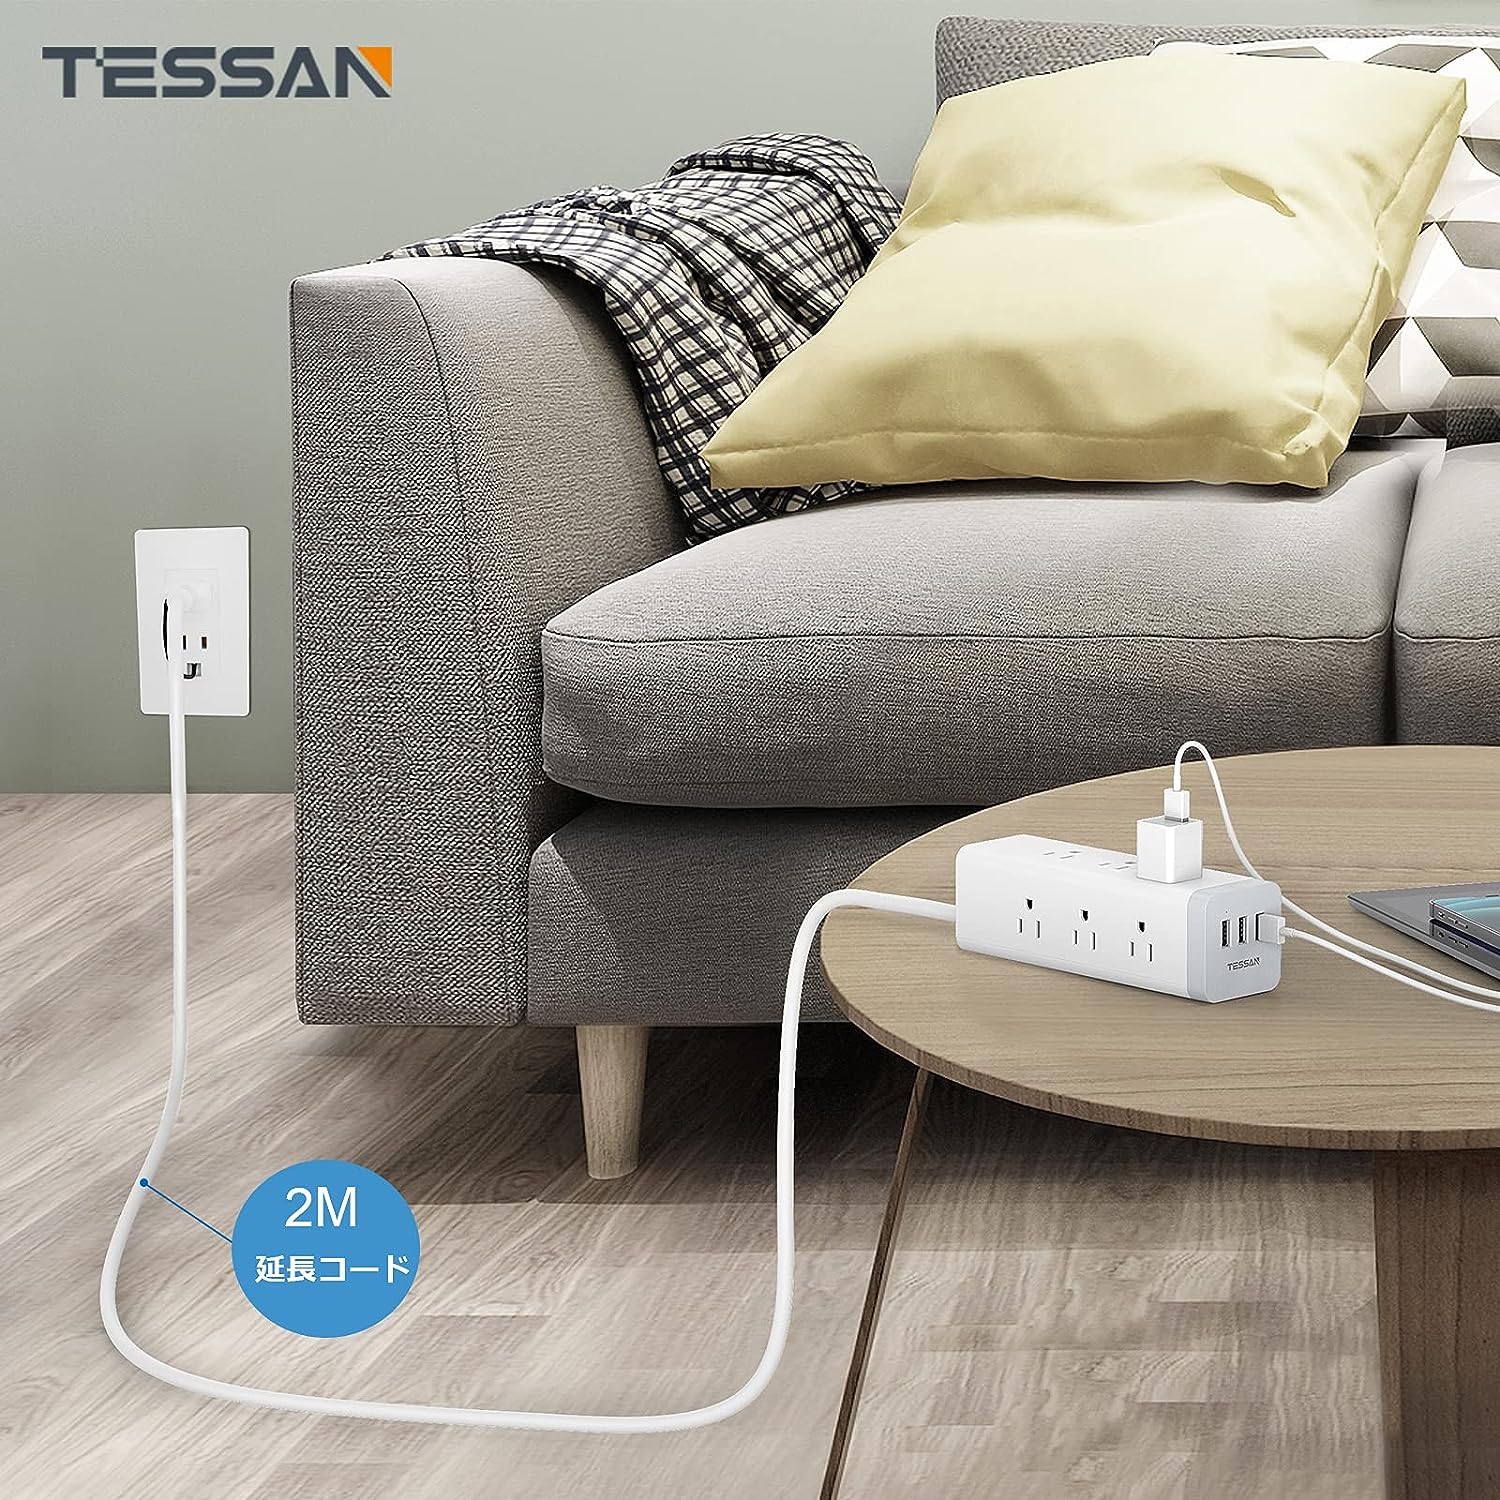 TESSAN 電源タップ 延長コード 2m usb コンセントタップ 雷ガード 9個ACコンセント 3USBポート